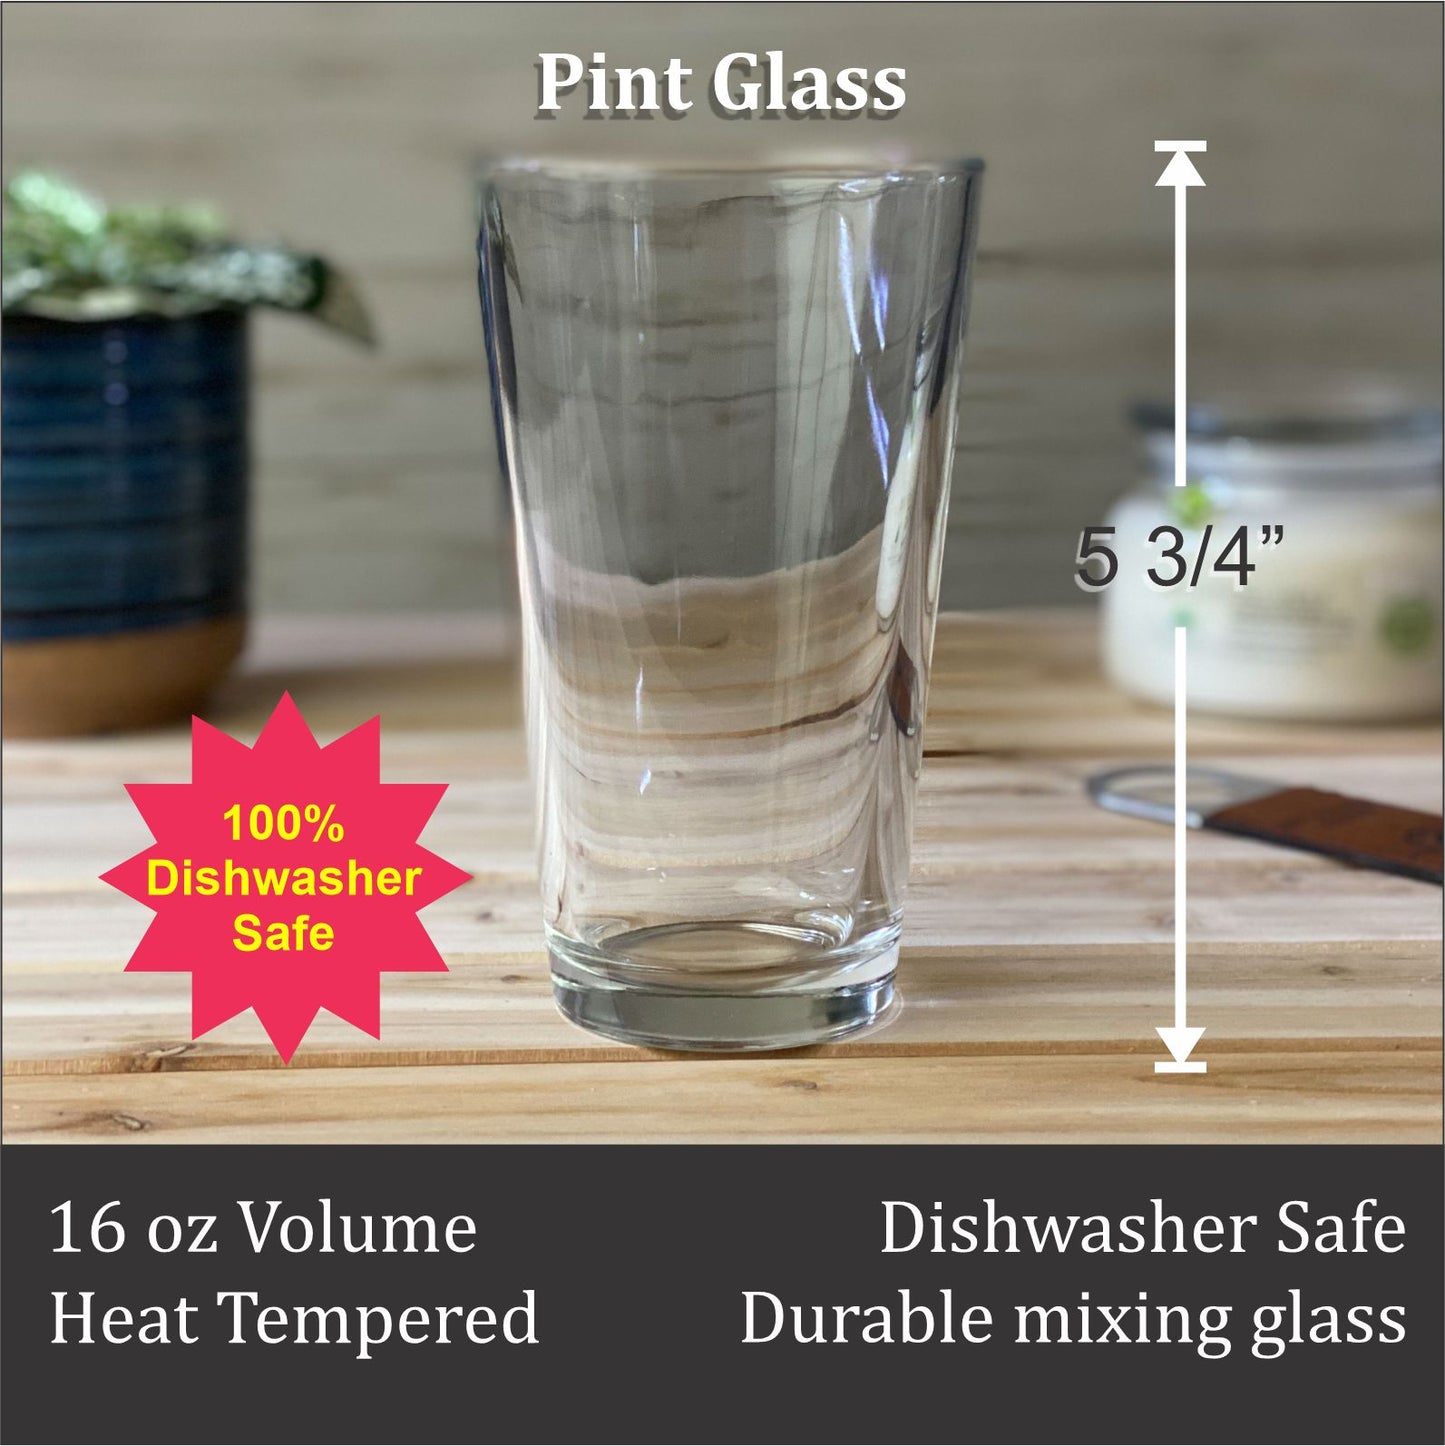 Moose -  Pint glass